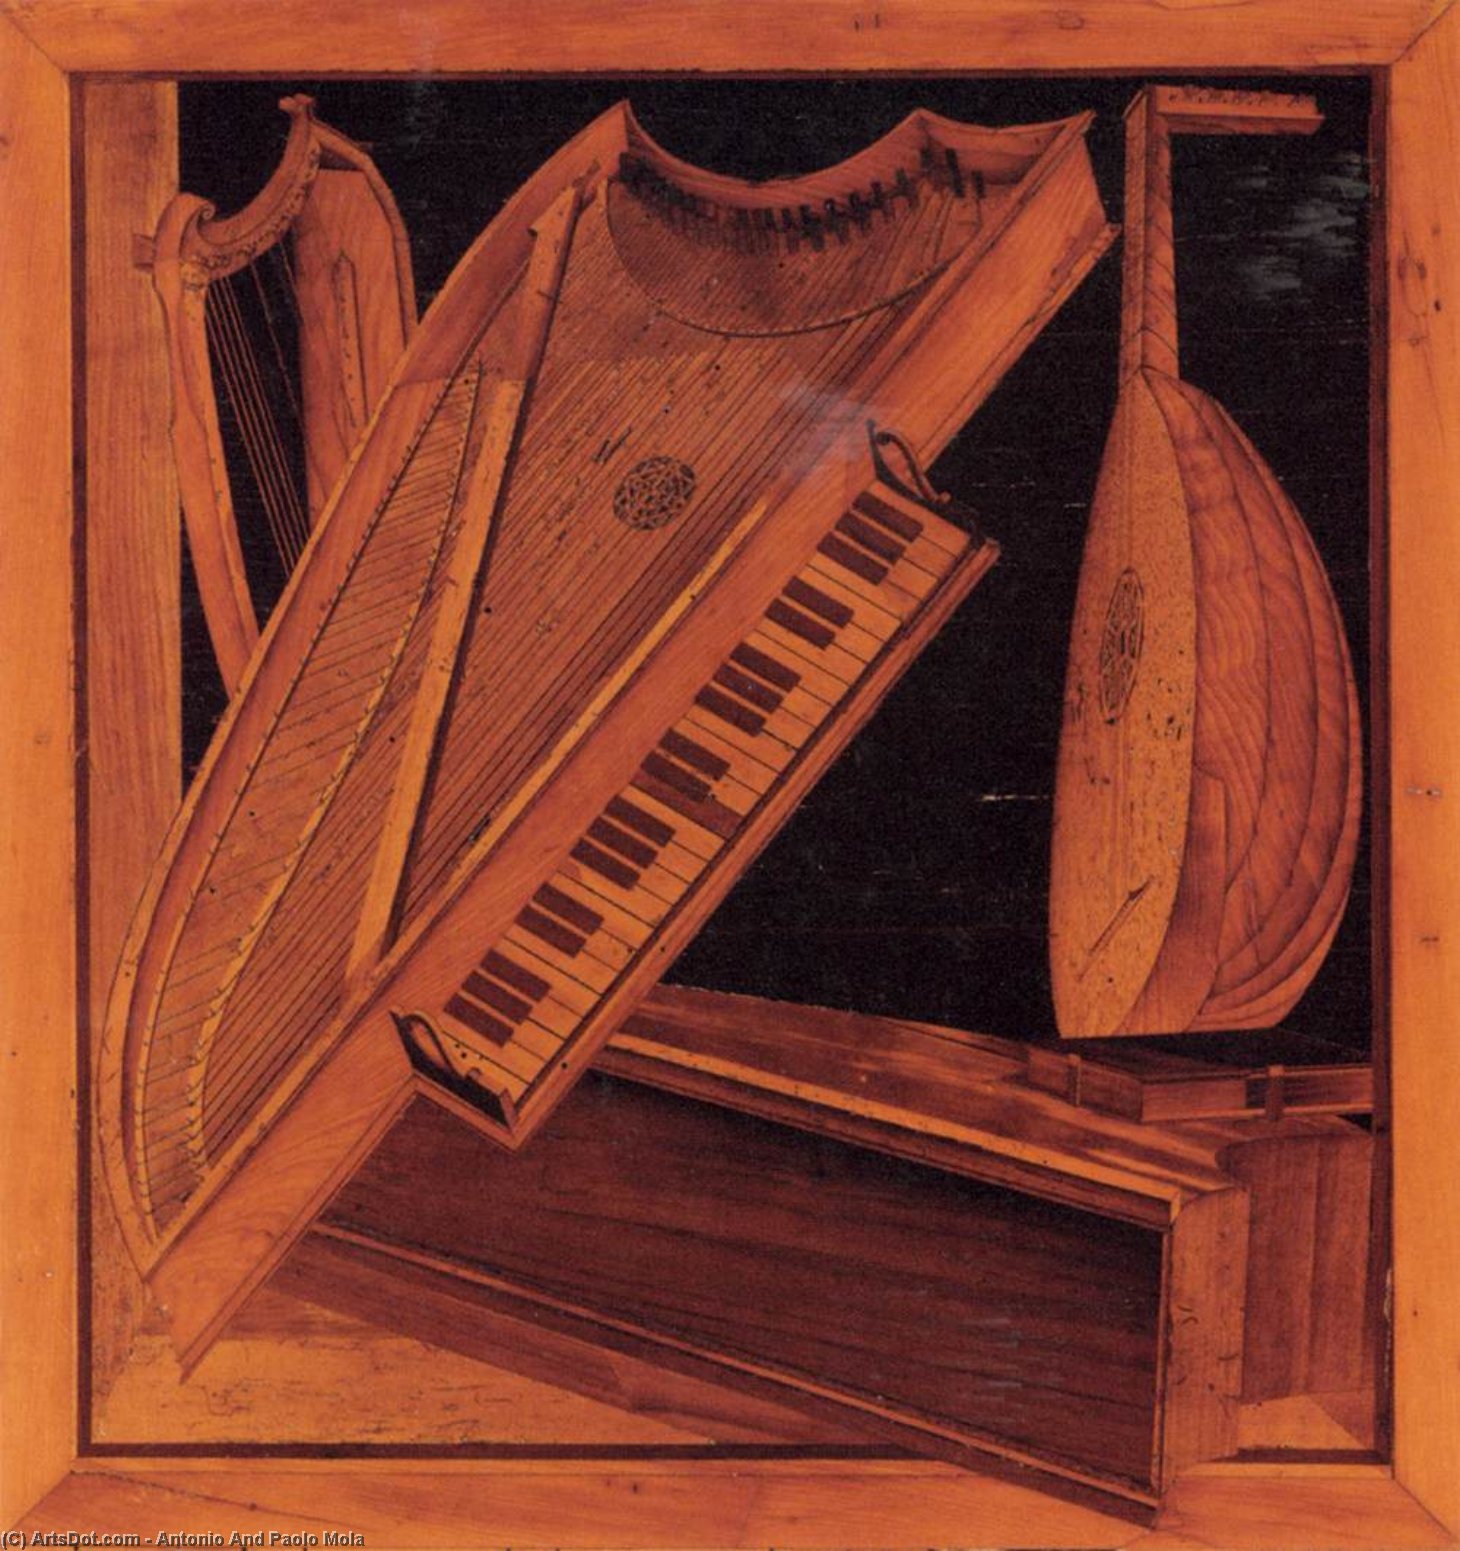  Artwork Replica Musical instruments, 1505 by Antonio And Paolo Mola (1489-1539) | ArtsDot.com